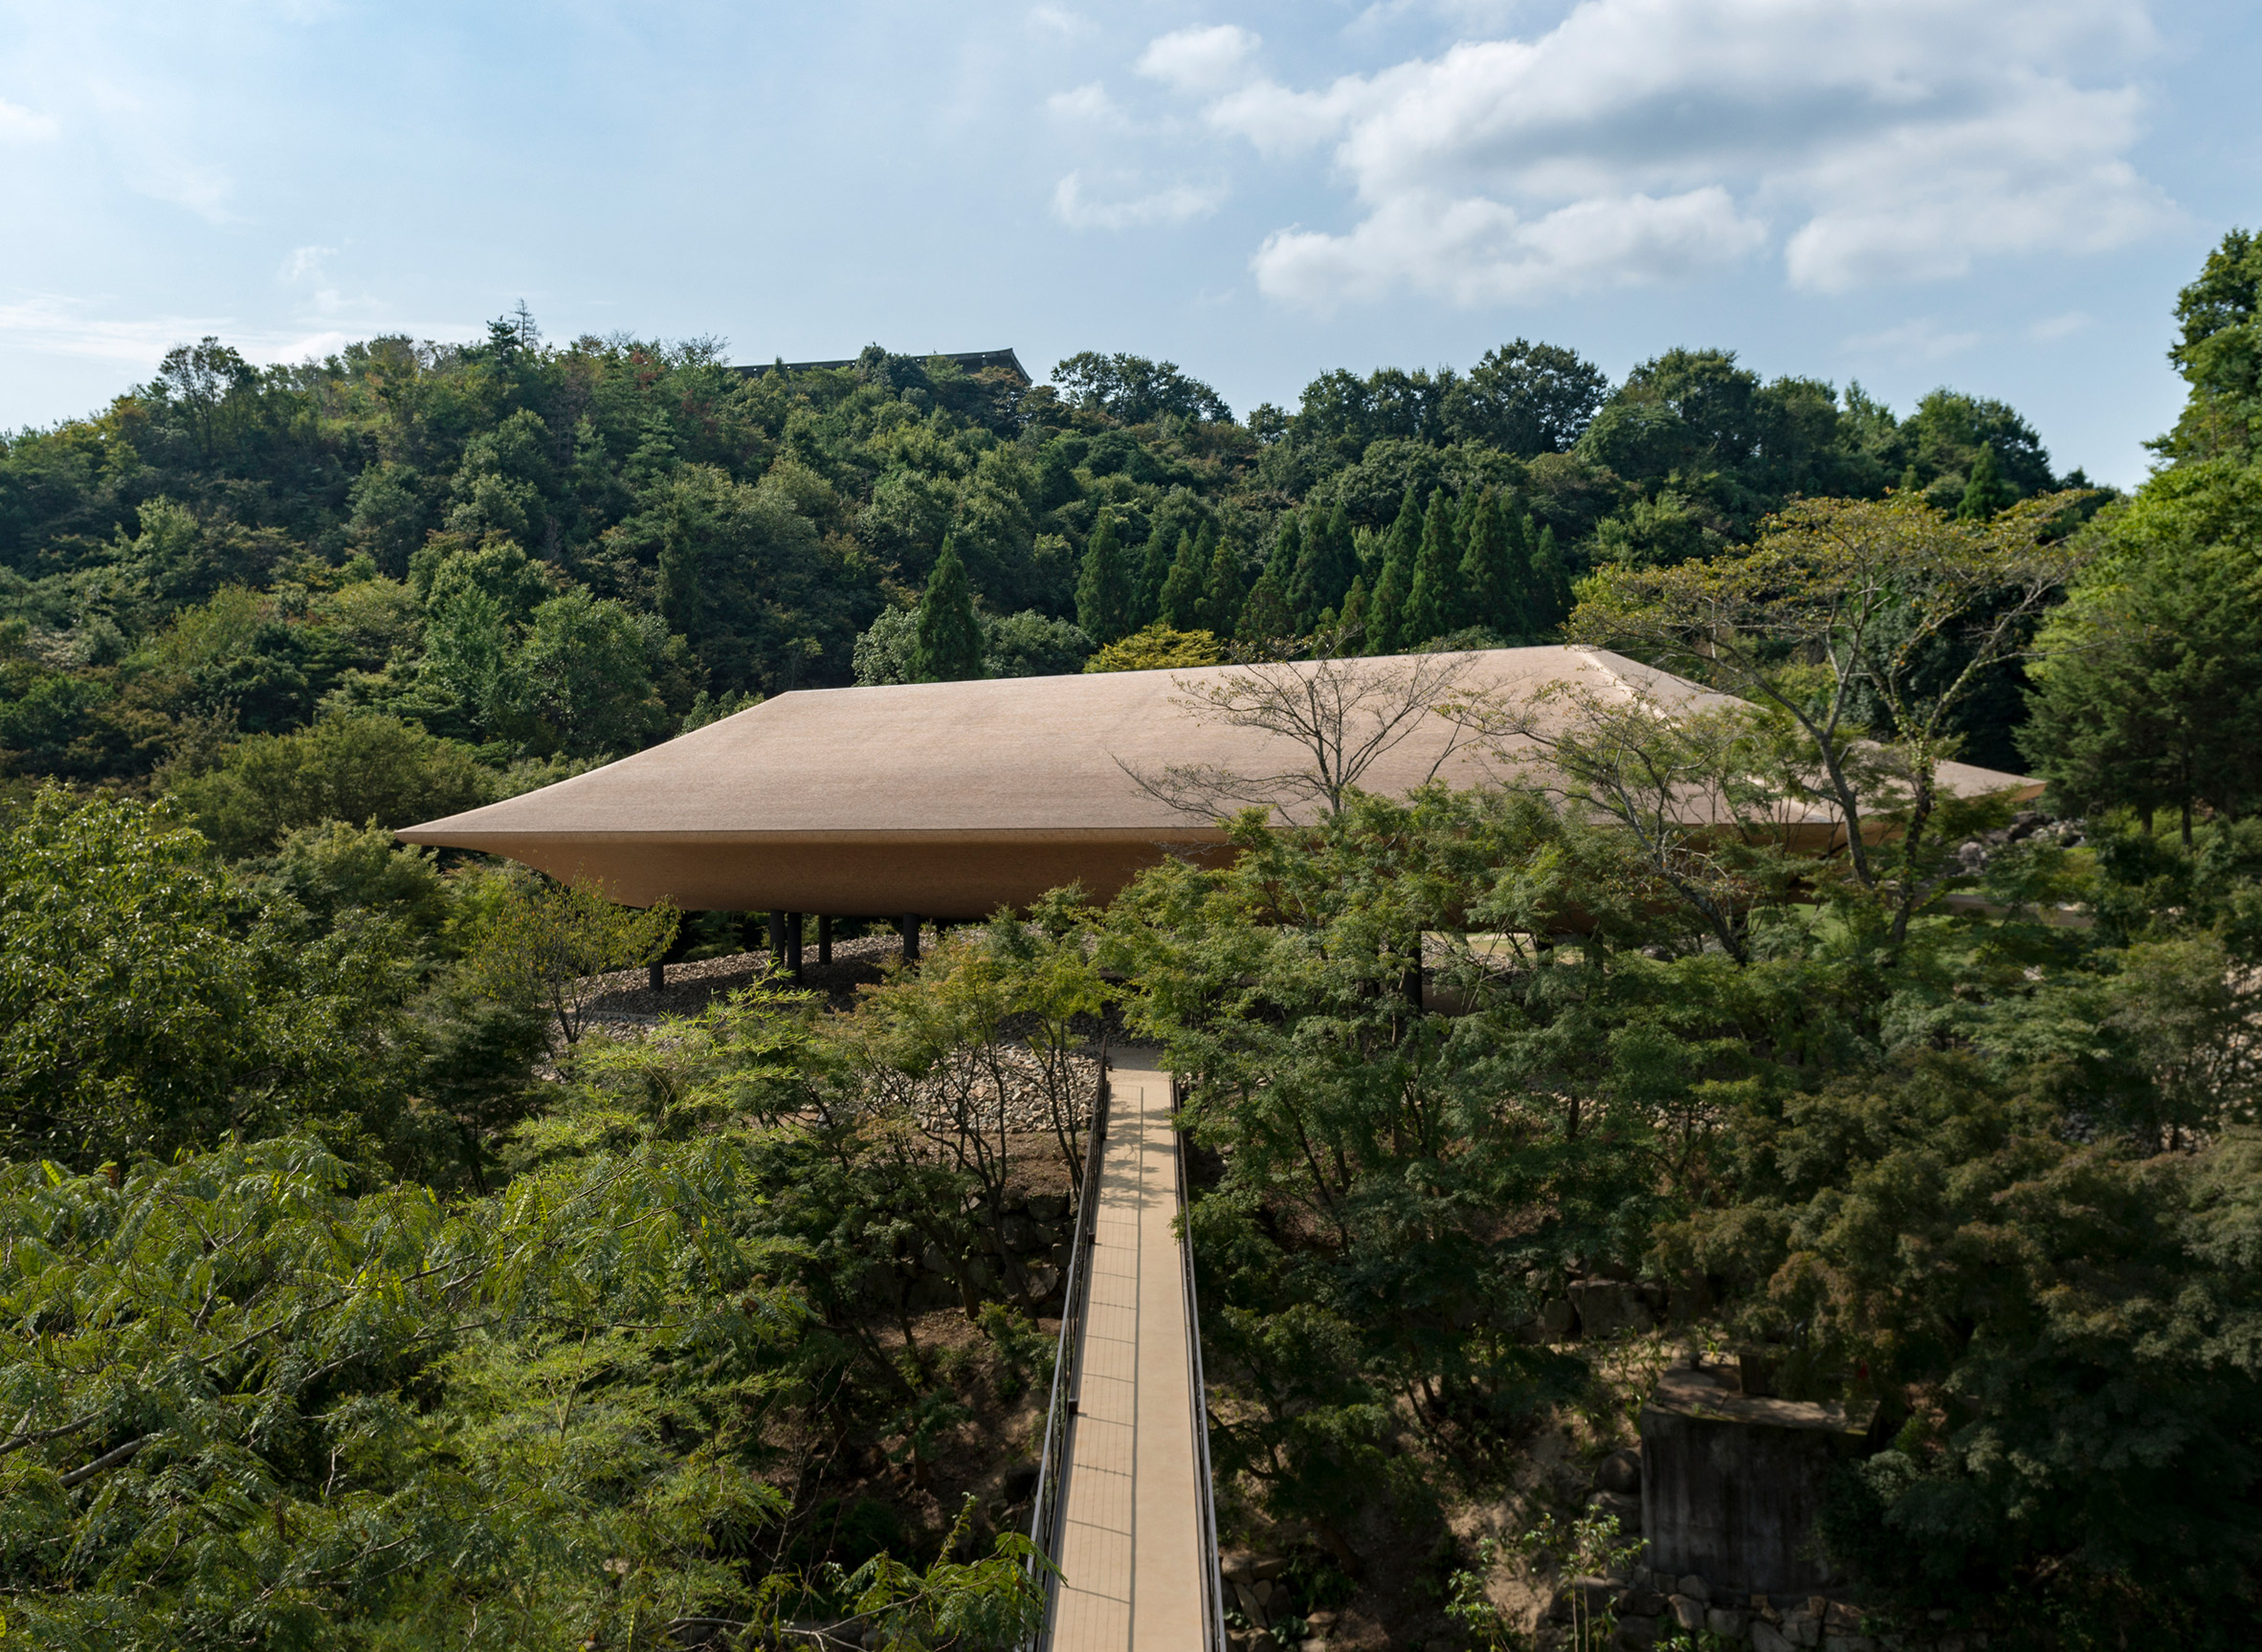 Shinshoji Zen Museum pavilion by Kohei Nawa and Sandwich studio